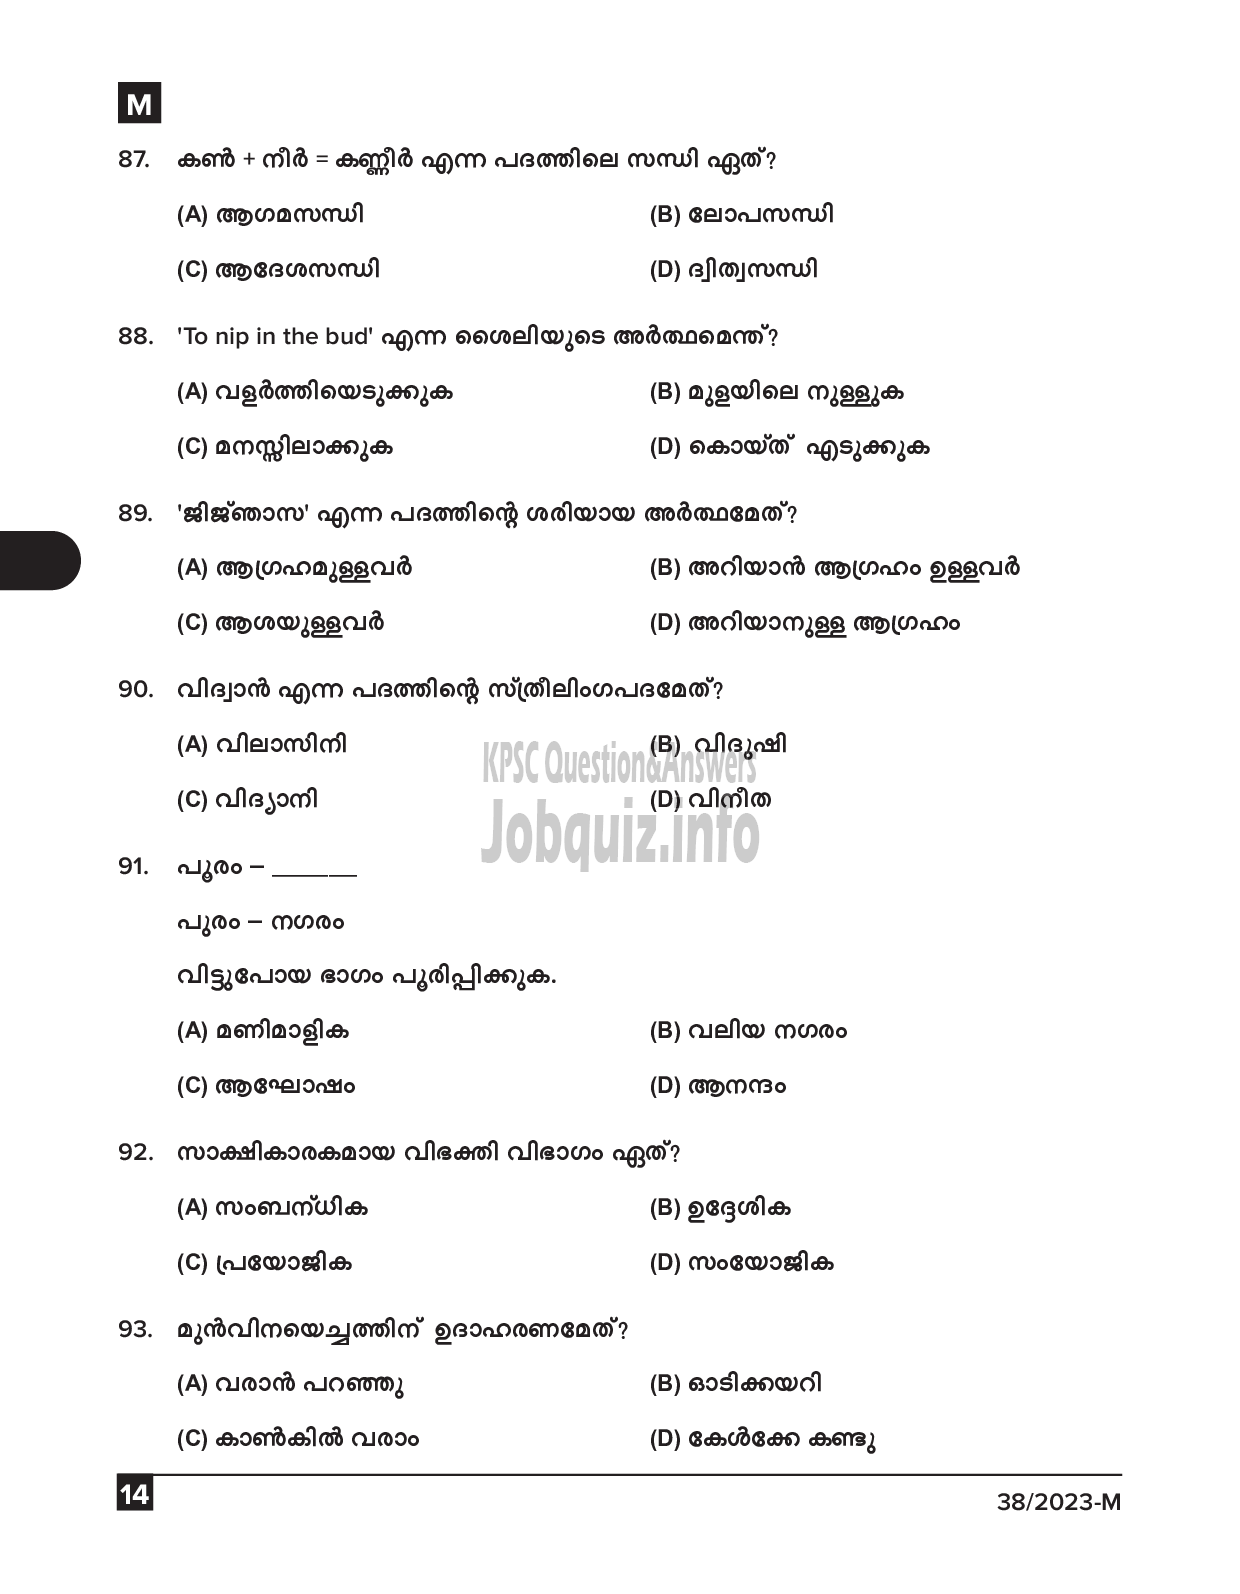 Kerala PSC Question Paper - Junior Typist in Apex Societies, L.D Typist in Various Departments, Typist Gr II in various Companies/ Corporations etc (SSLC Level Main Examination 2022)-14